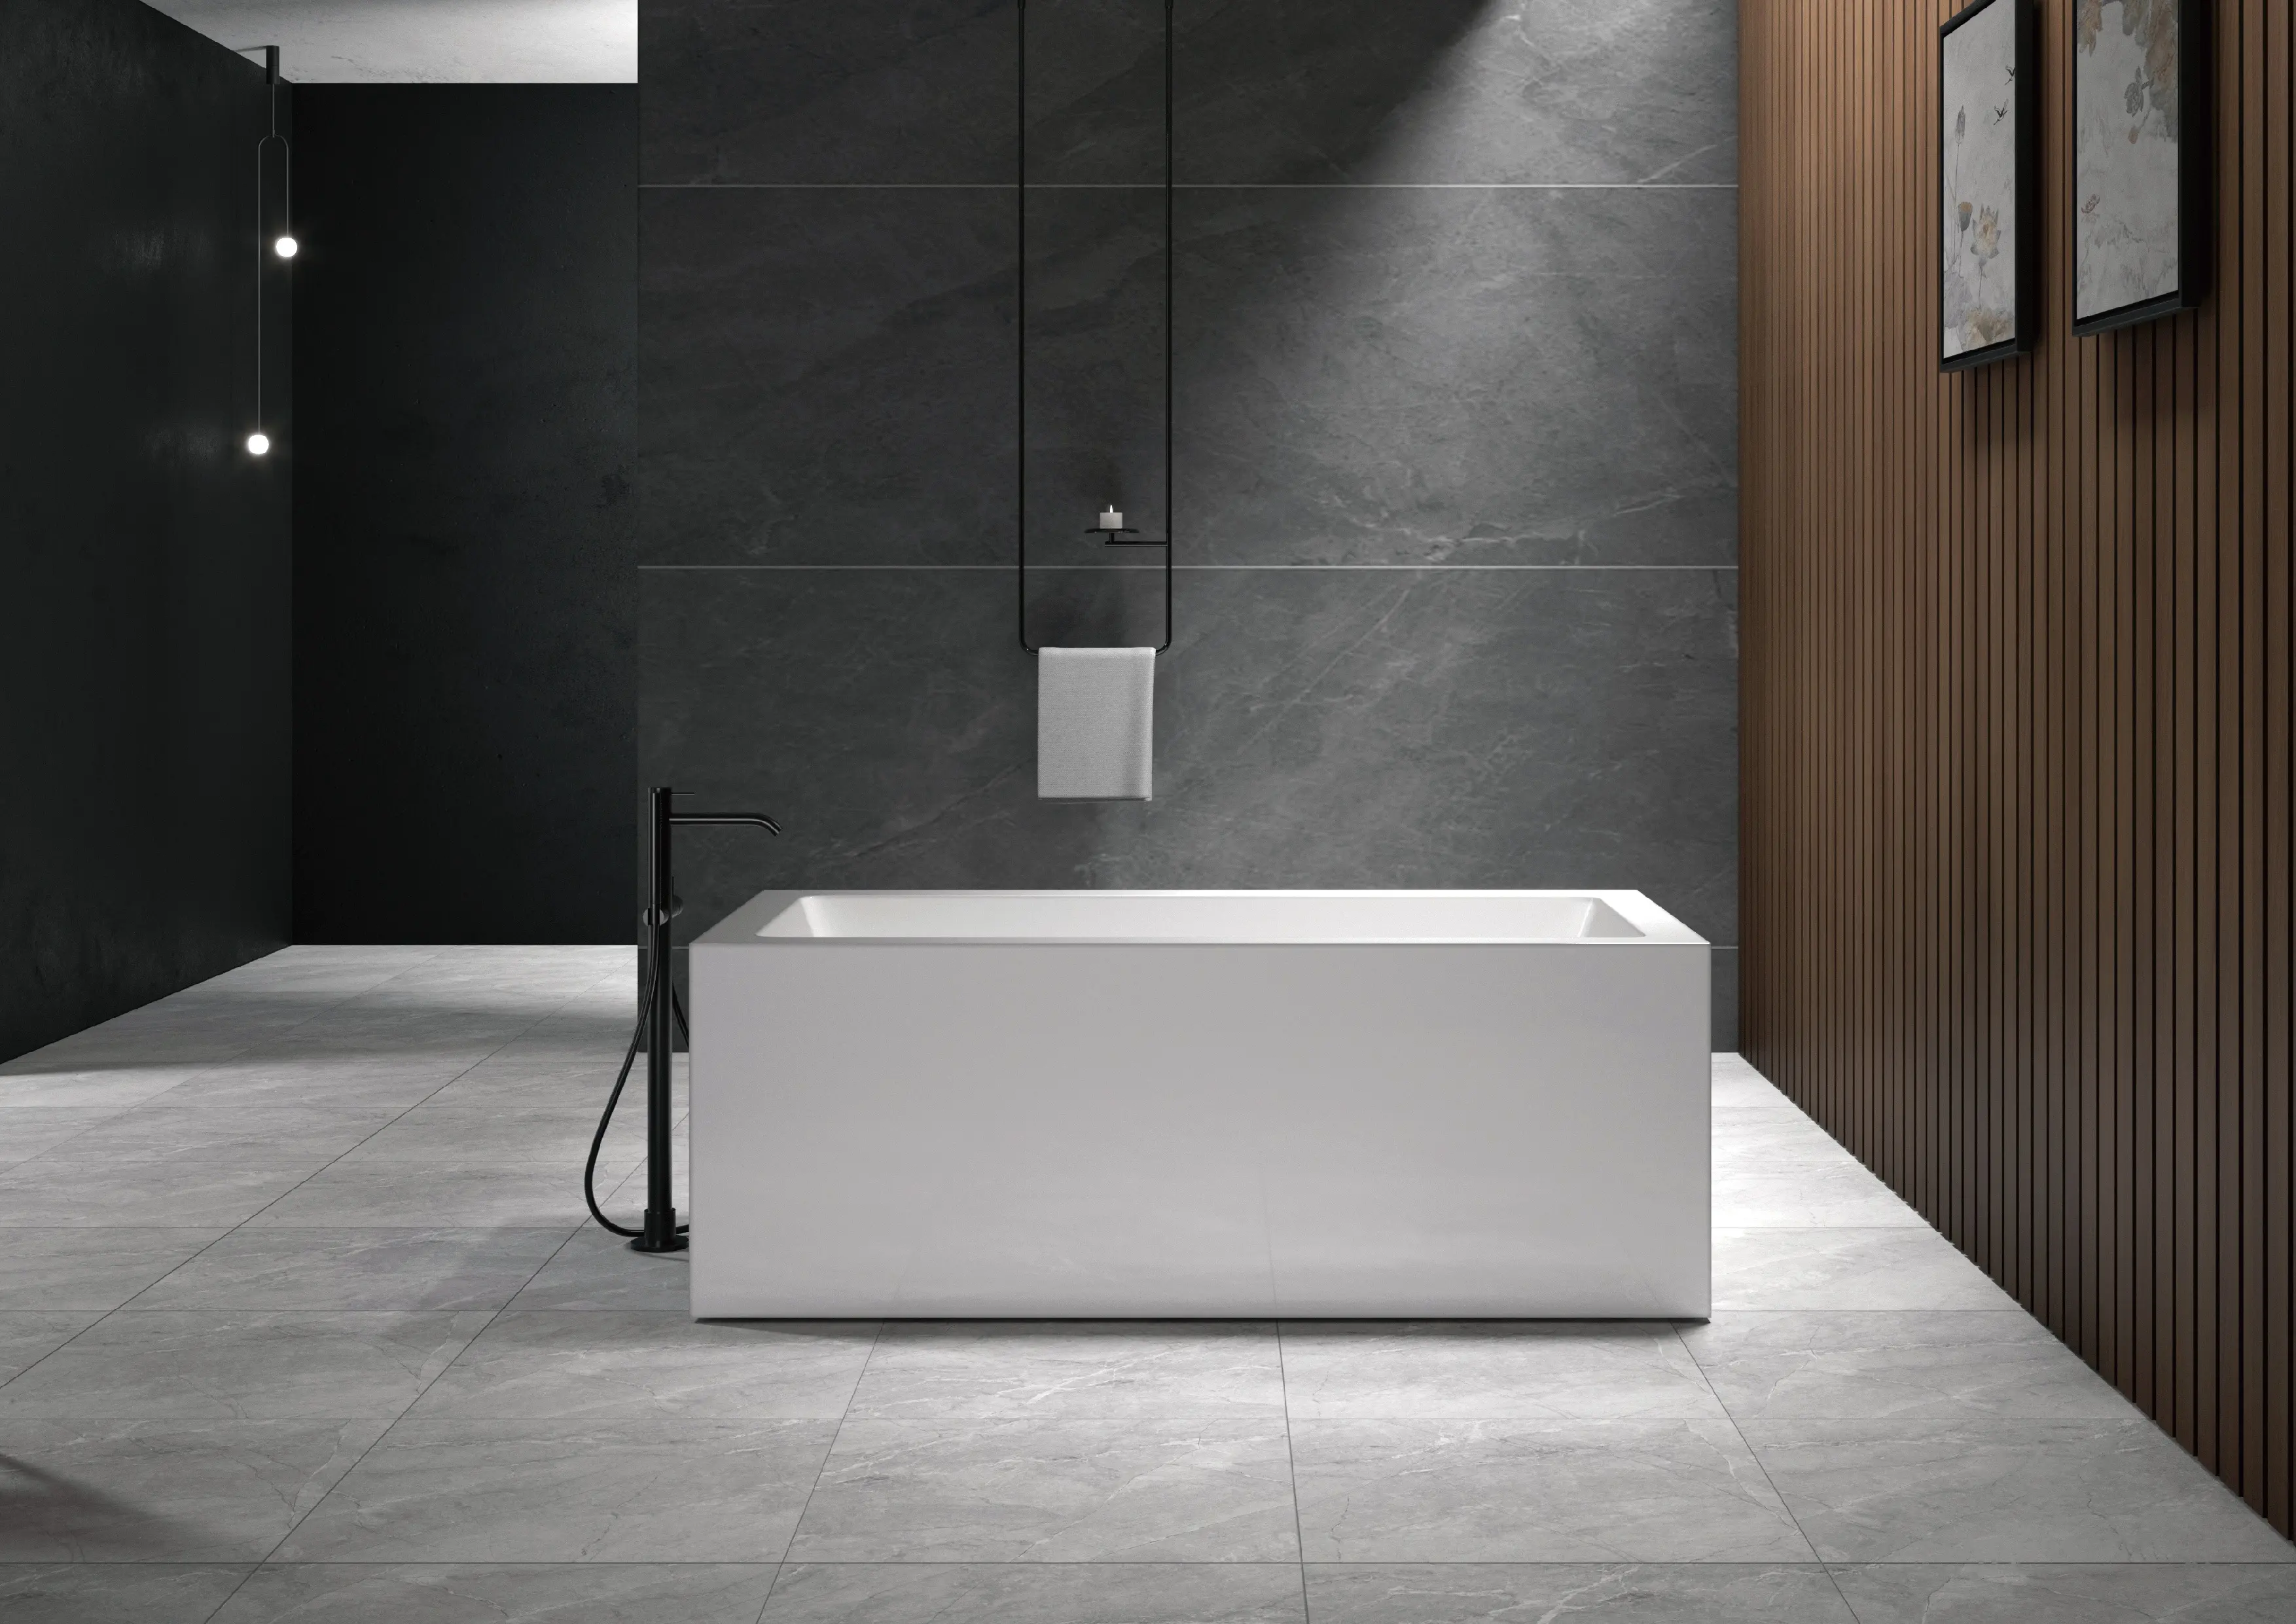 15YRS OEM/ODM Experience Factory Fashion Designed Acrylic Durable Freestanding White Bath Tub Whirlpool Bathtub